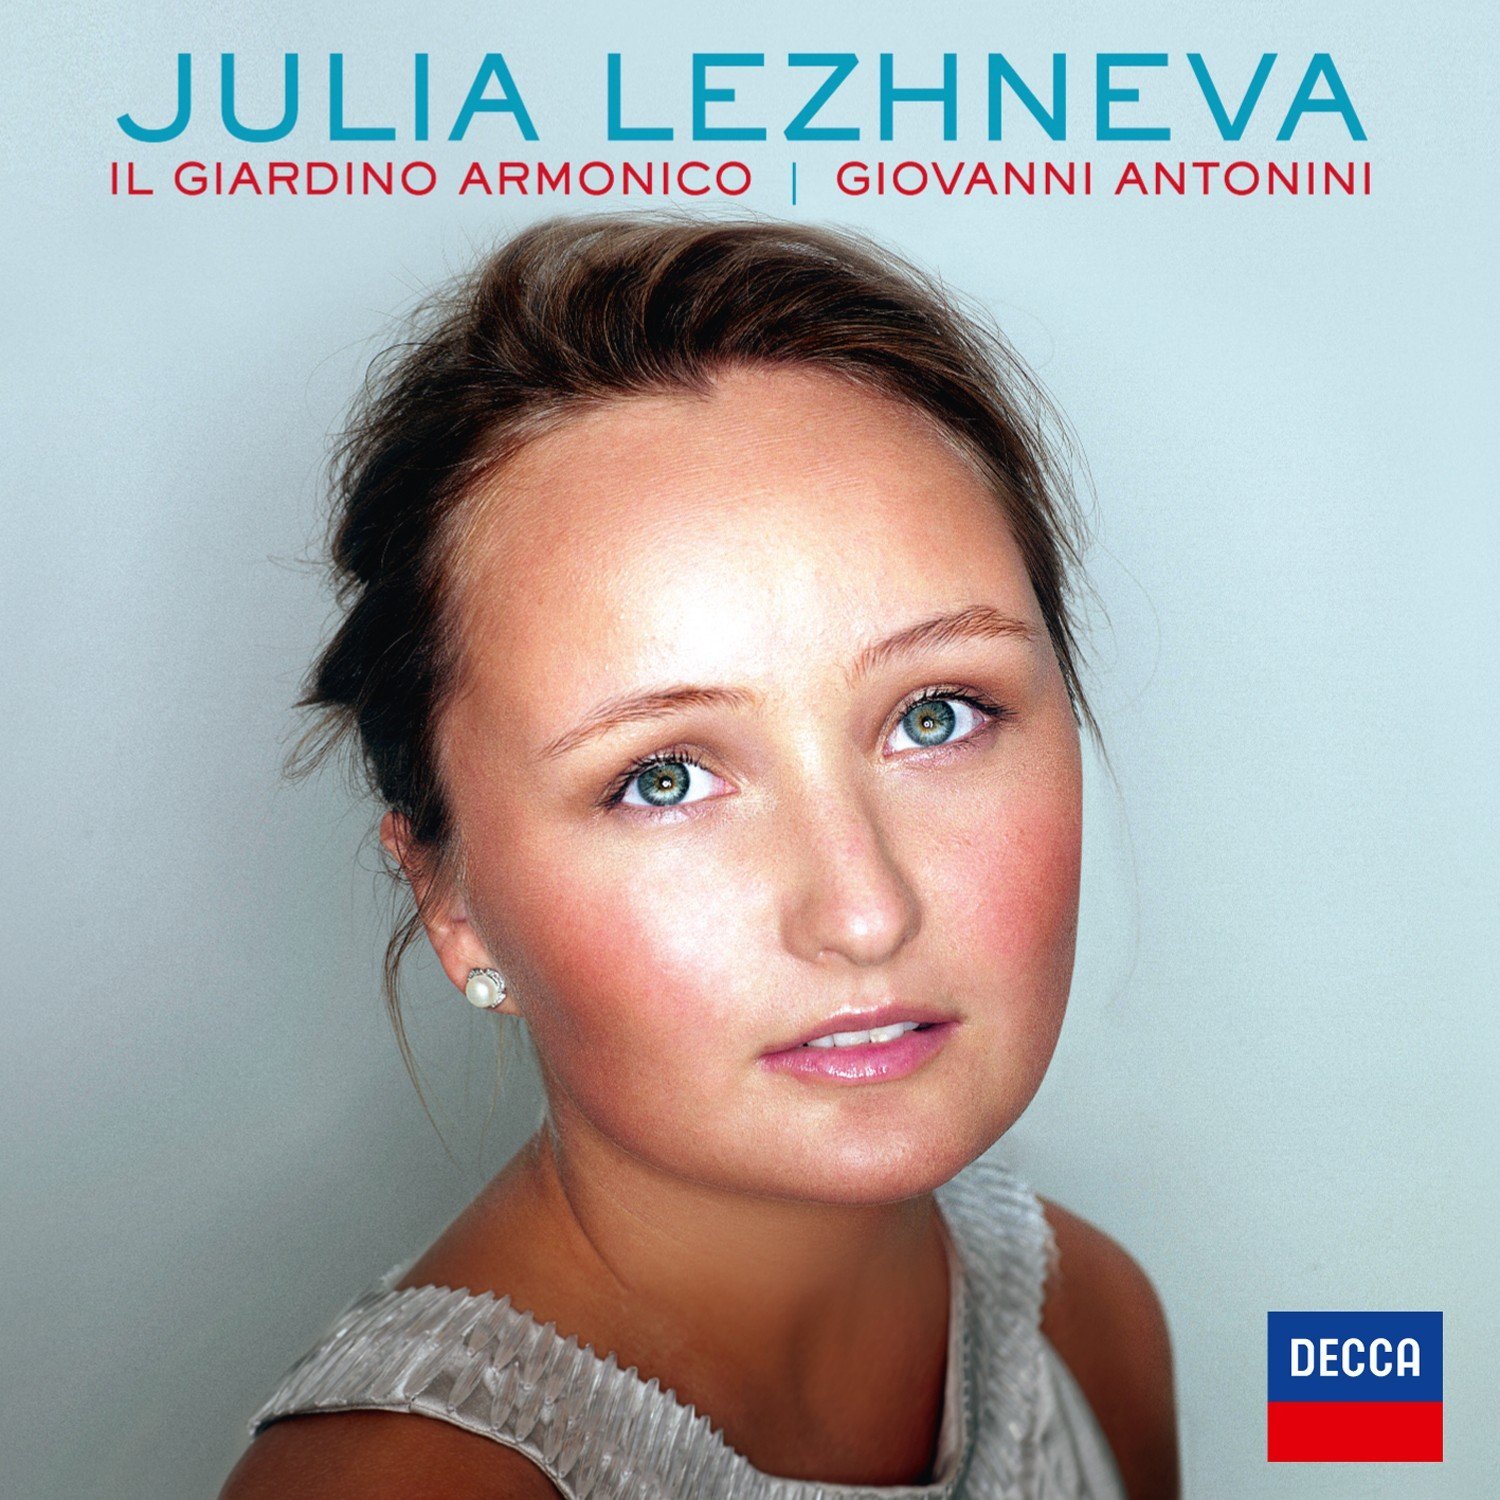 Julia Lezhneva's Alleluia on new release Decca